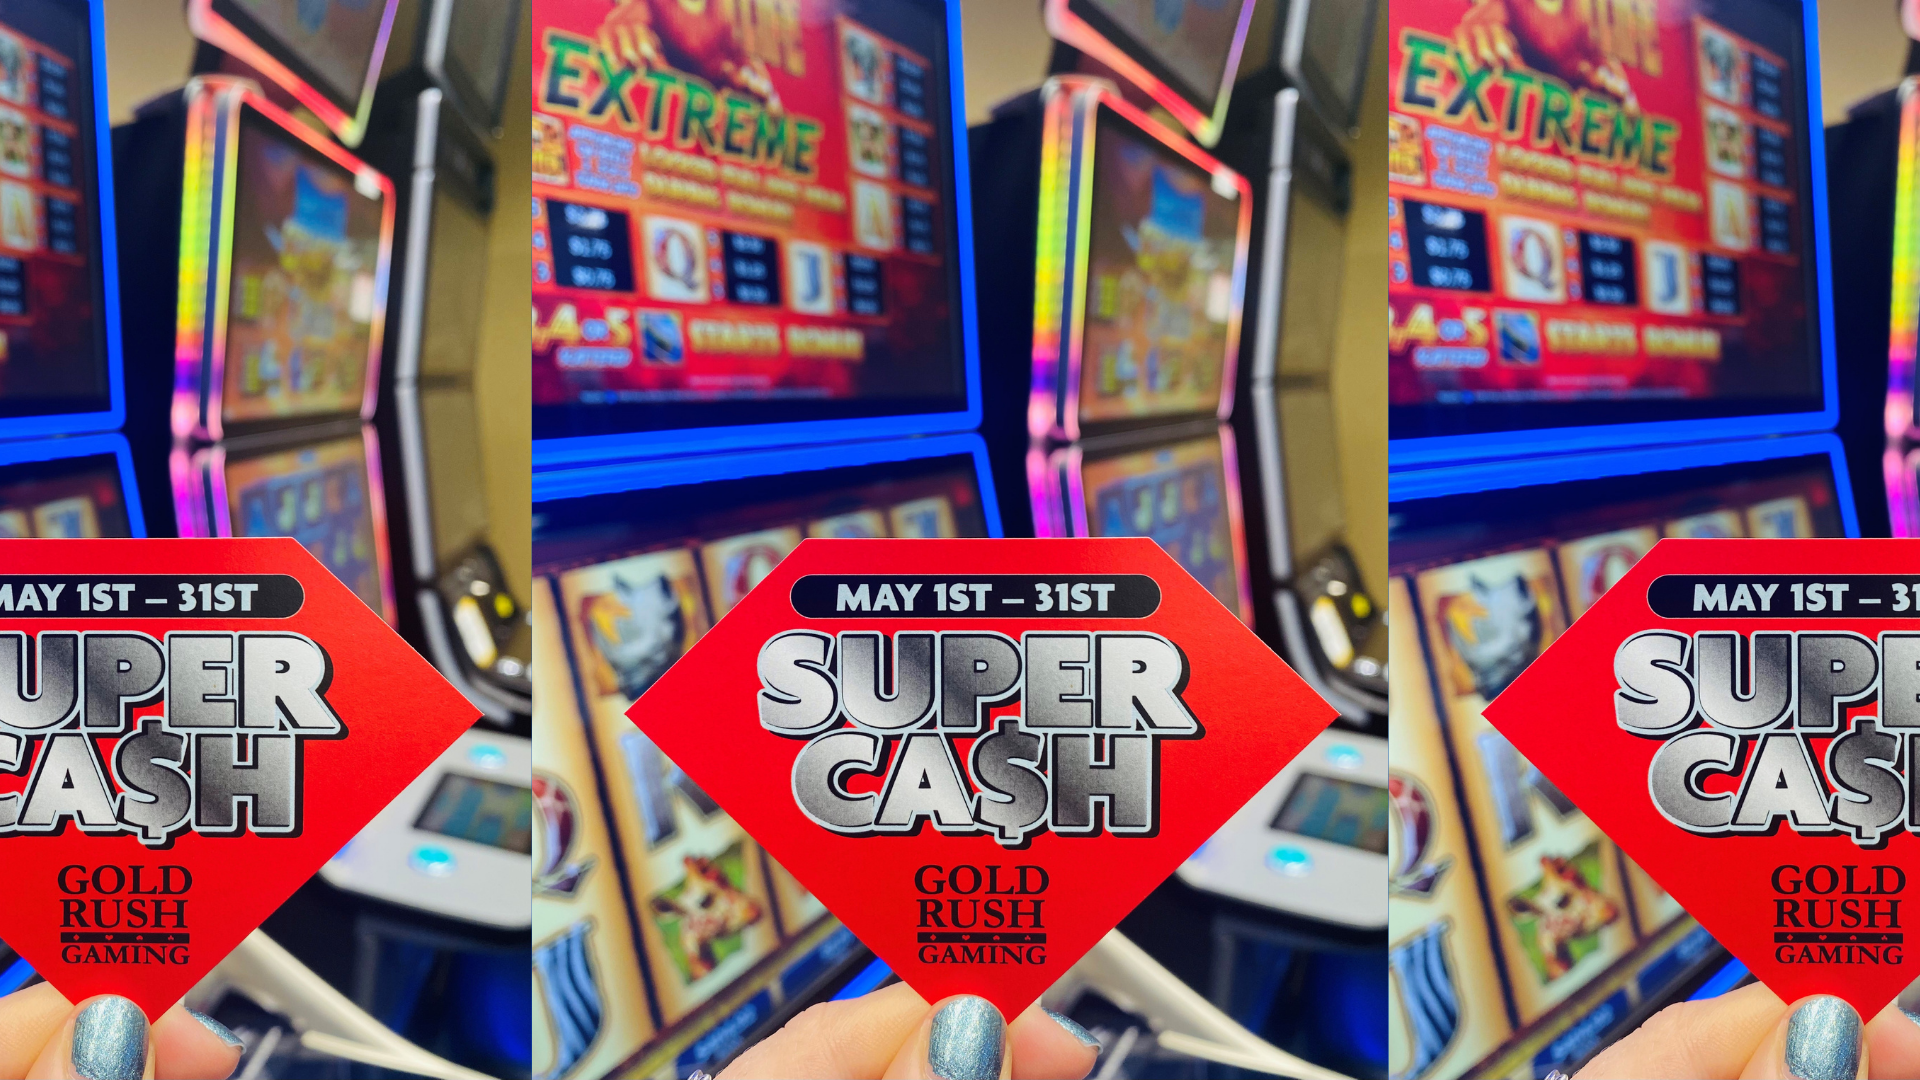 Super Cash - Gold Rush Gaming